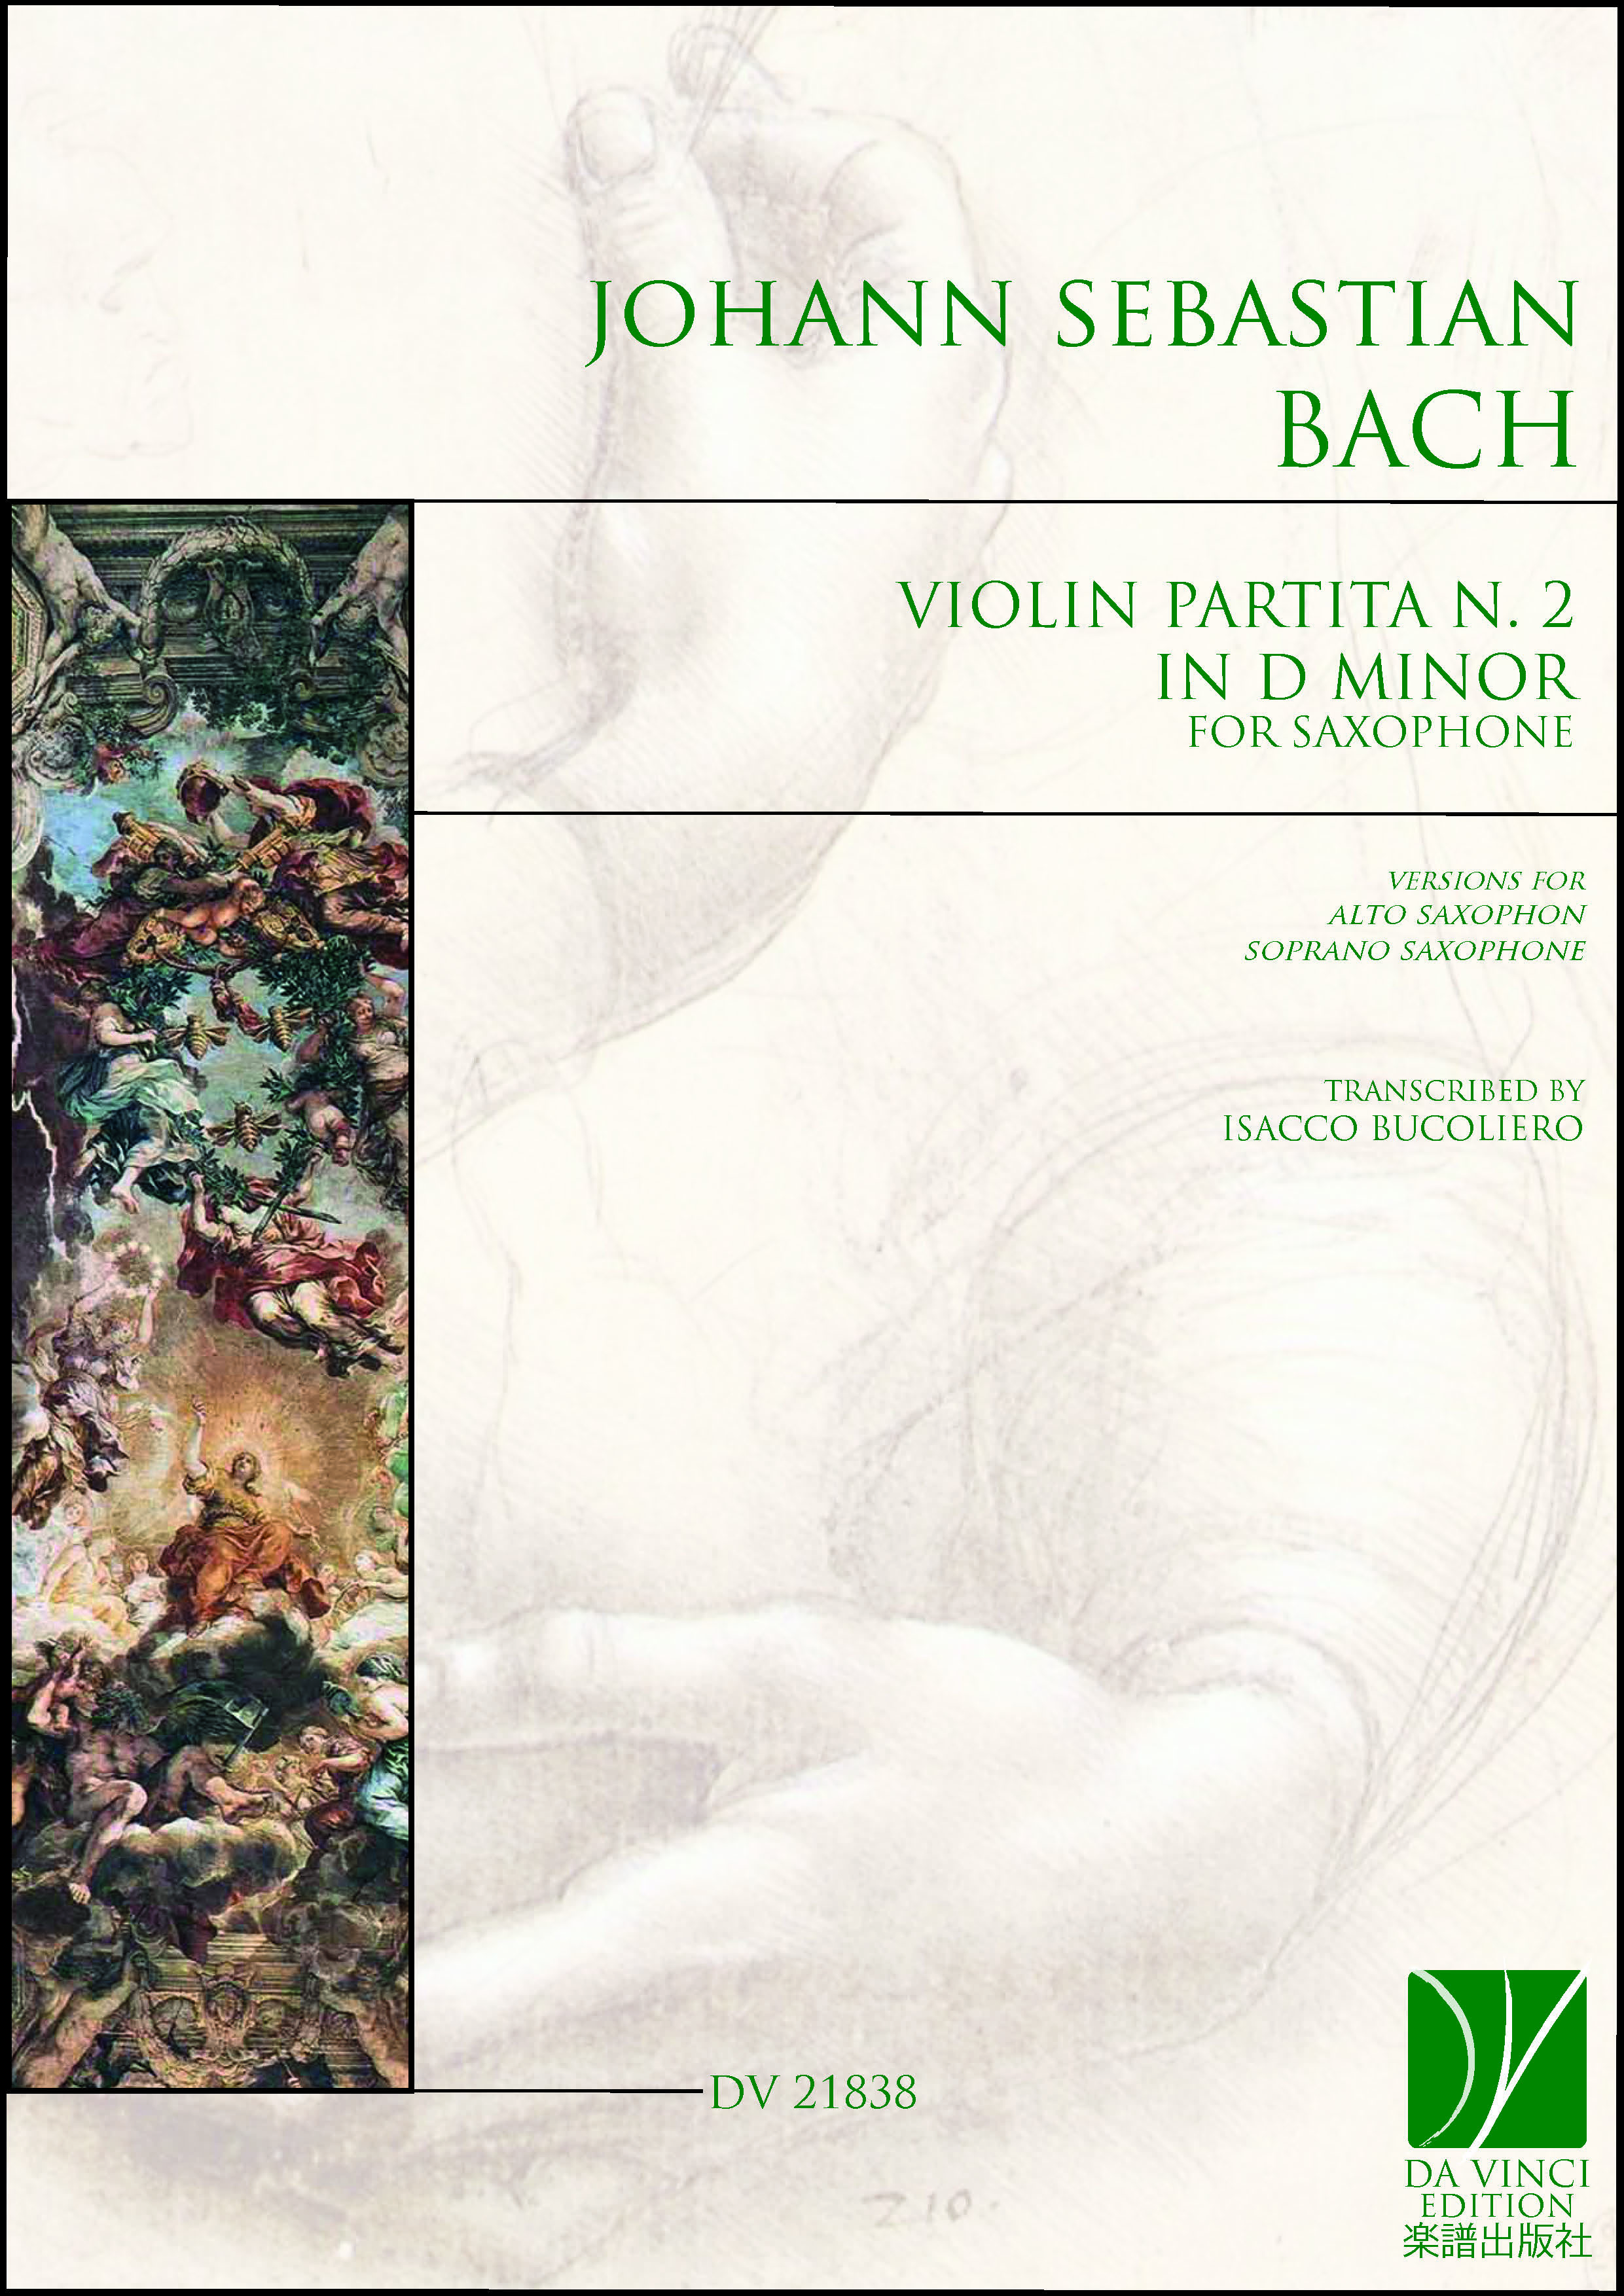 Violin partita n. 2 in D minor (BACH JOHANN SEBASTIAN)